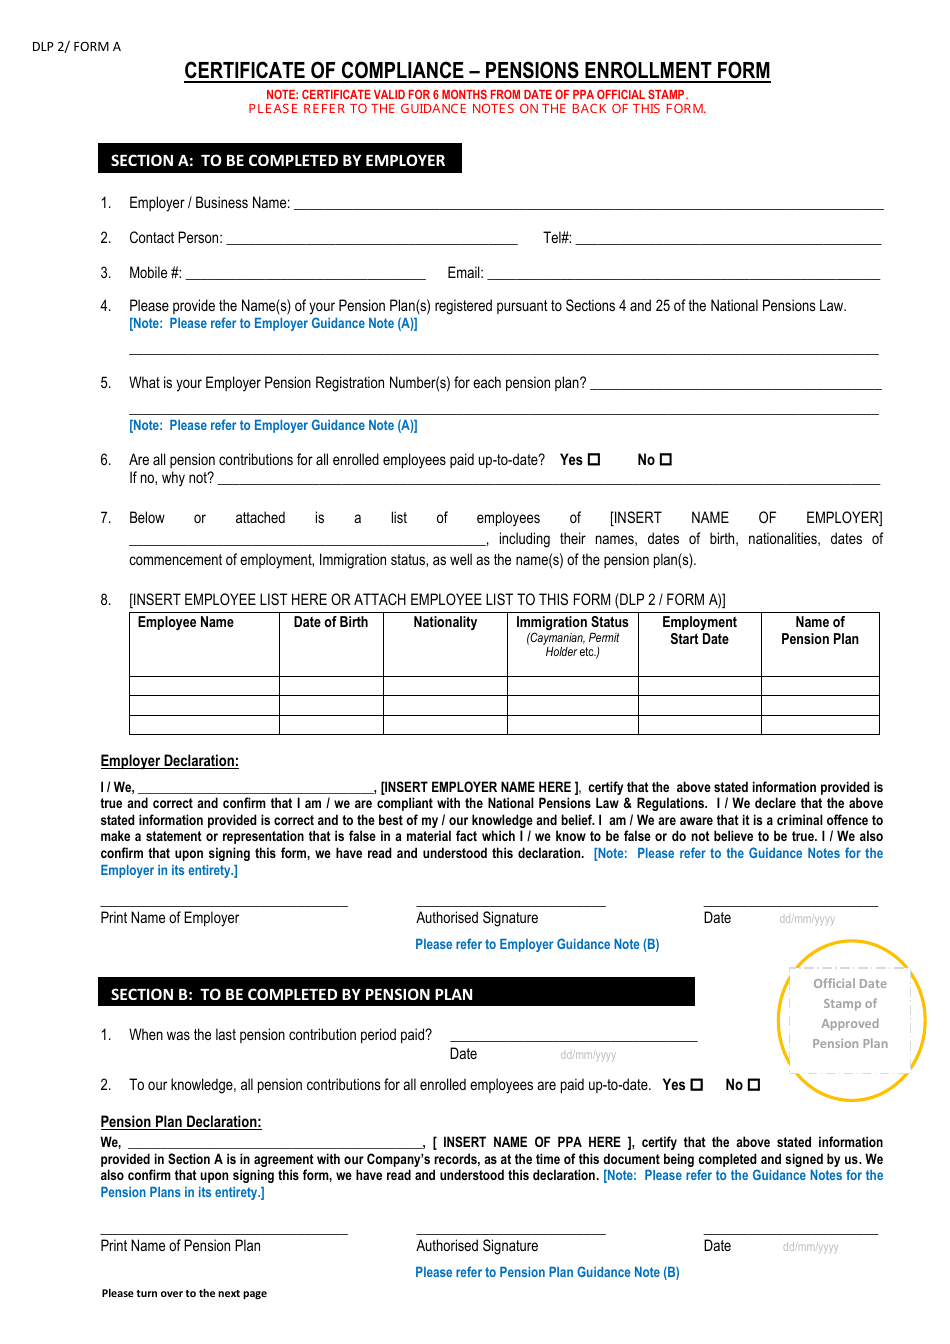 Form DLP2 (A) Certificate of Compliance - Pensions Enrollment Form - Cayman Islands, Page 1